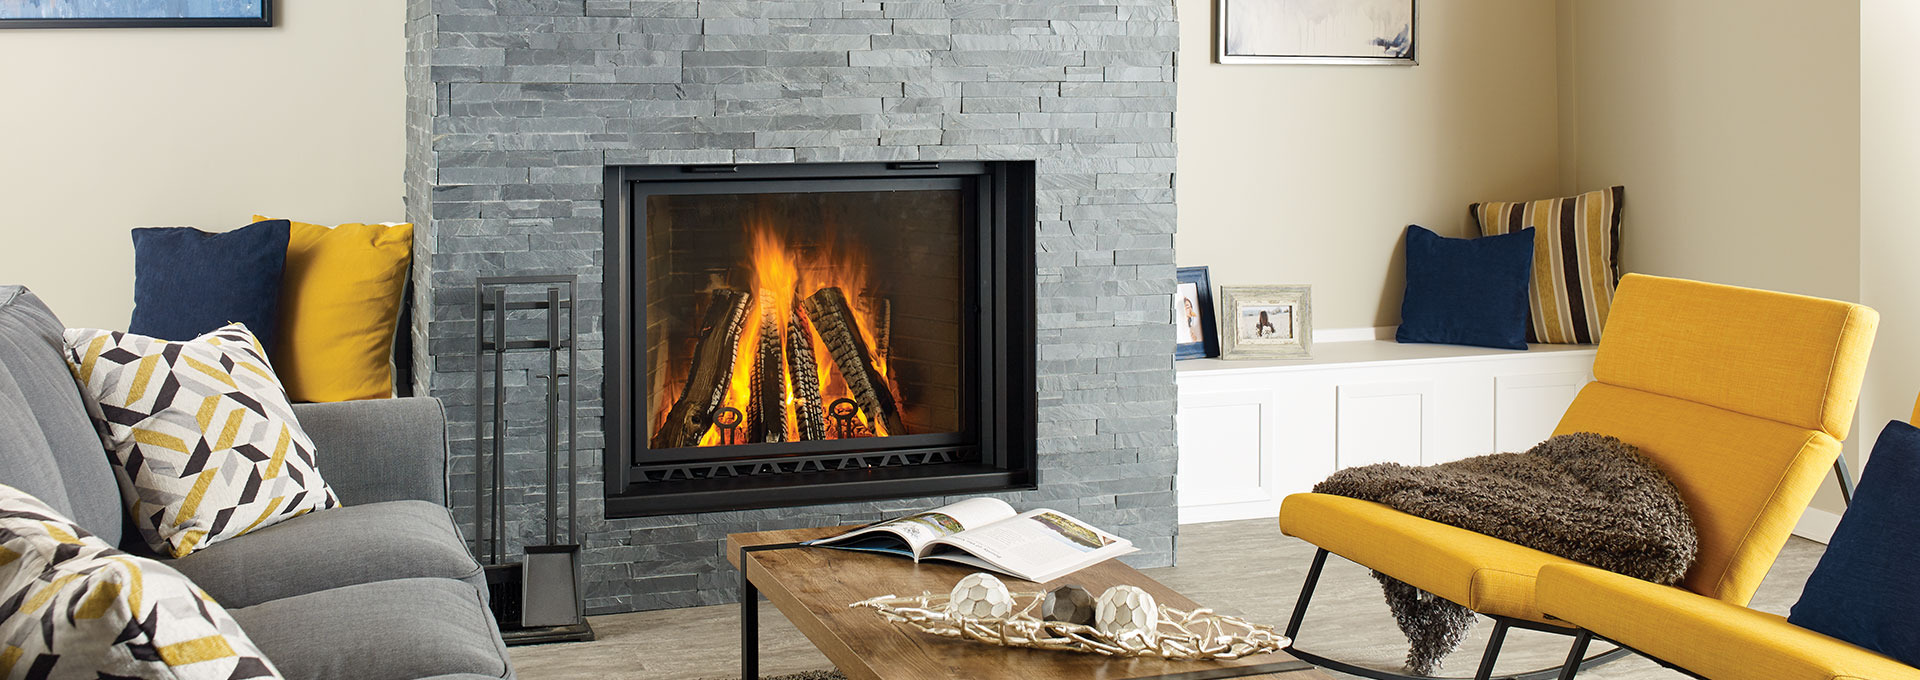 Regency CF780 Wood Fireplace with light grey layered stone surround